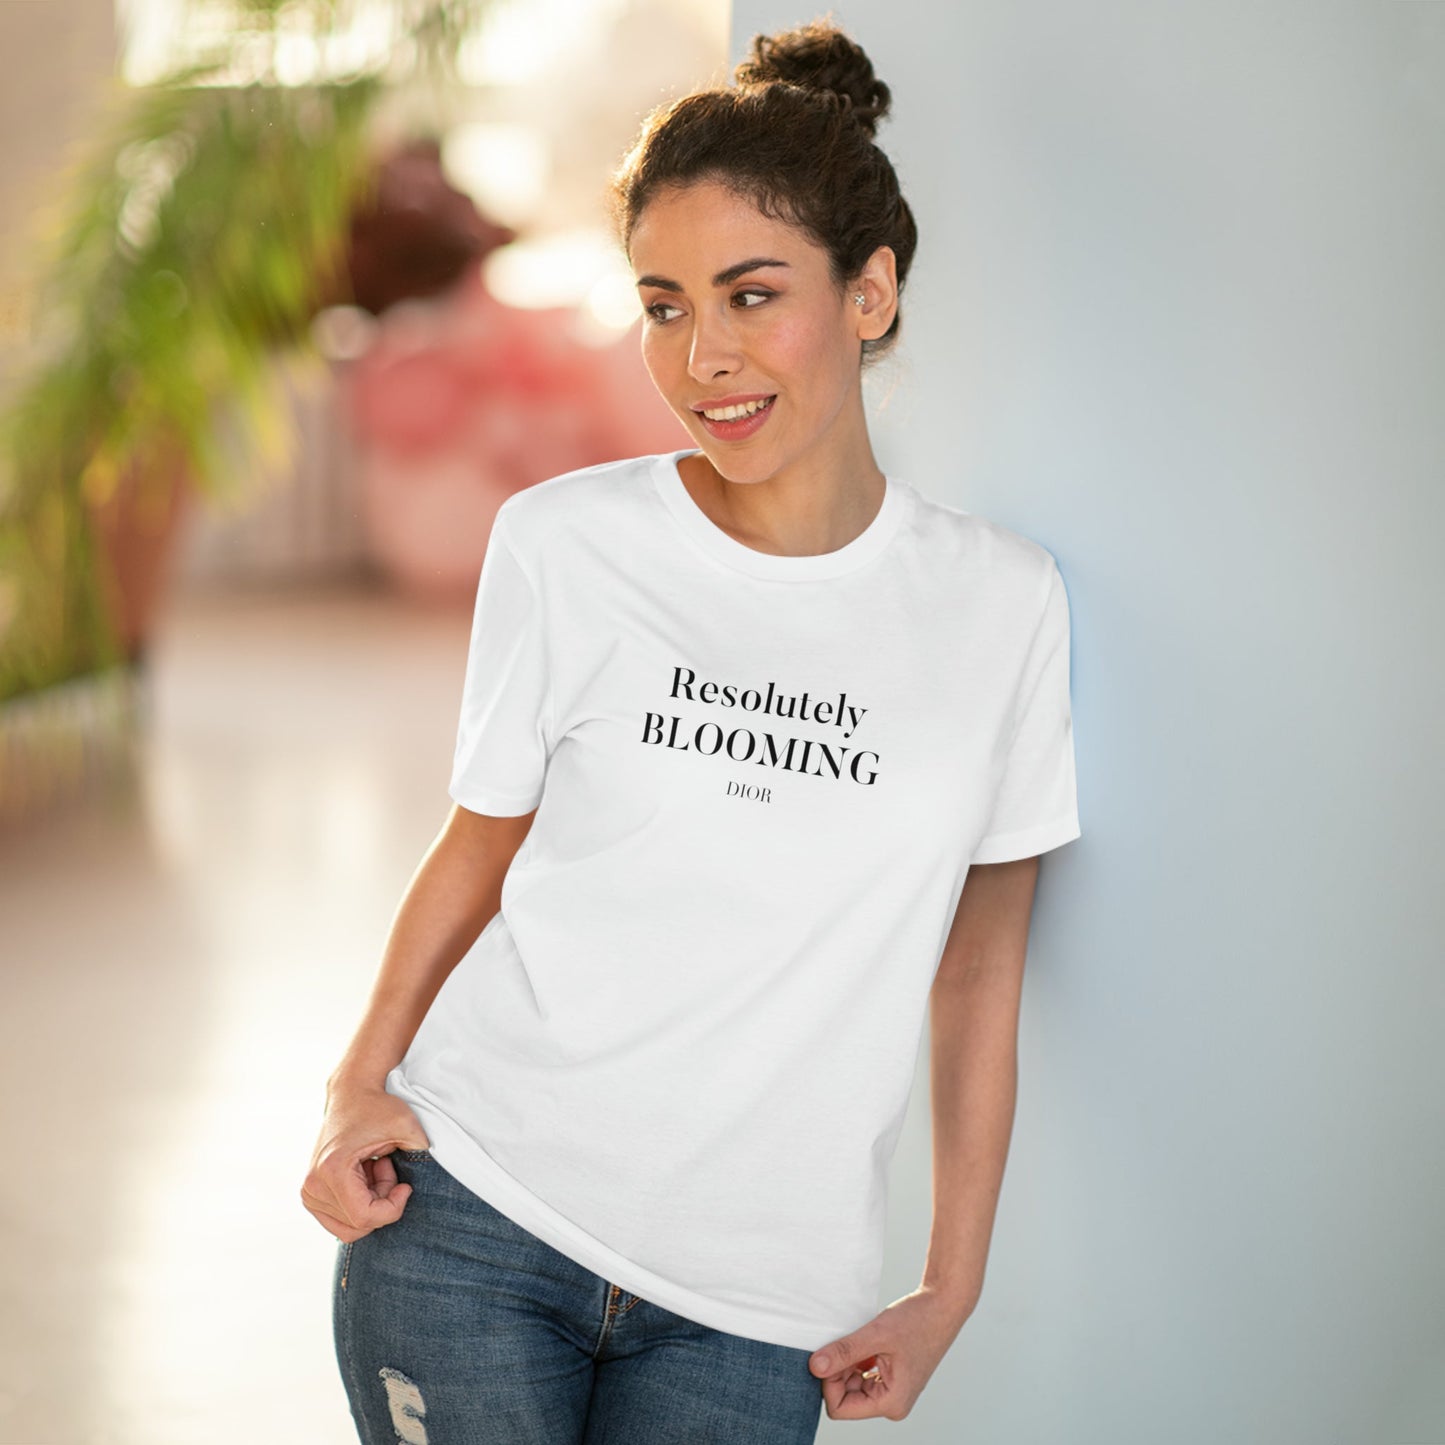 Inspirational Quote 'Blooming' Dior Organic Cotton T-shirt - Dior Tshirt